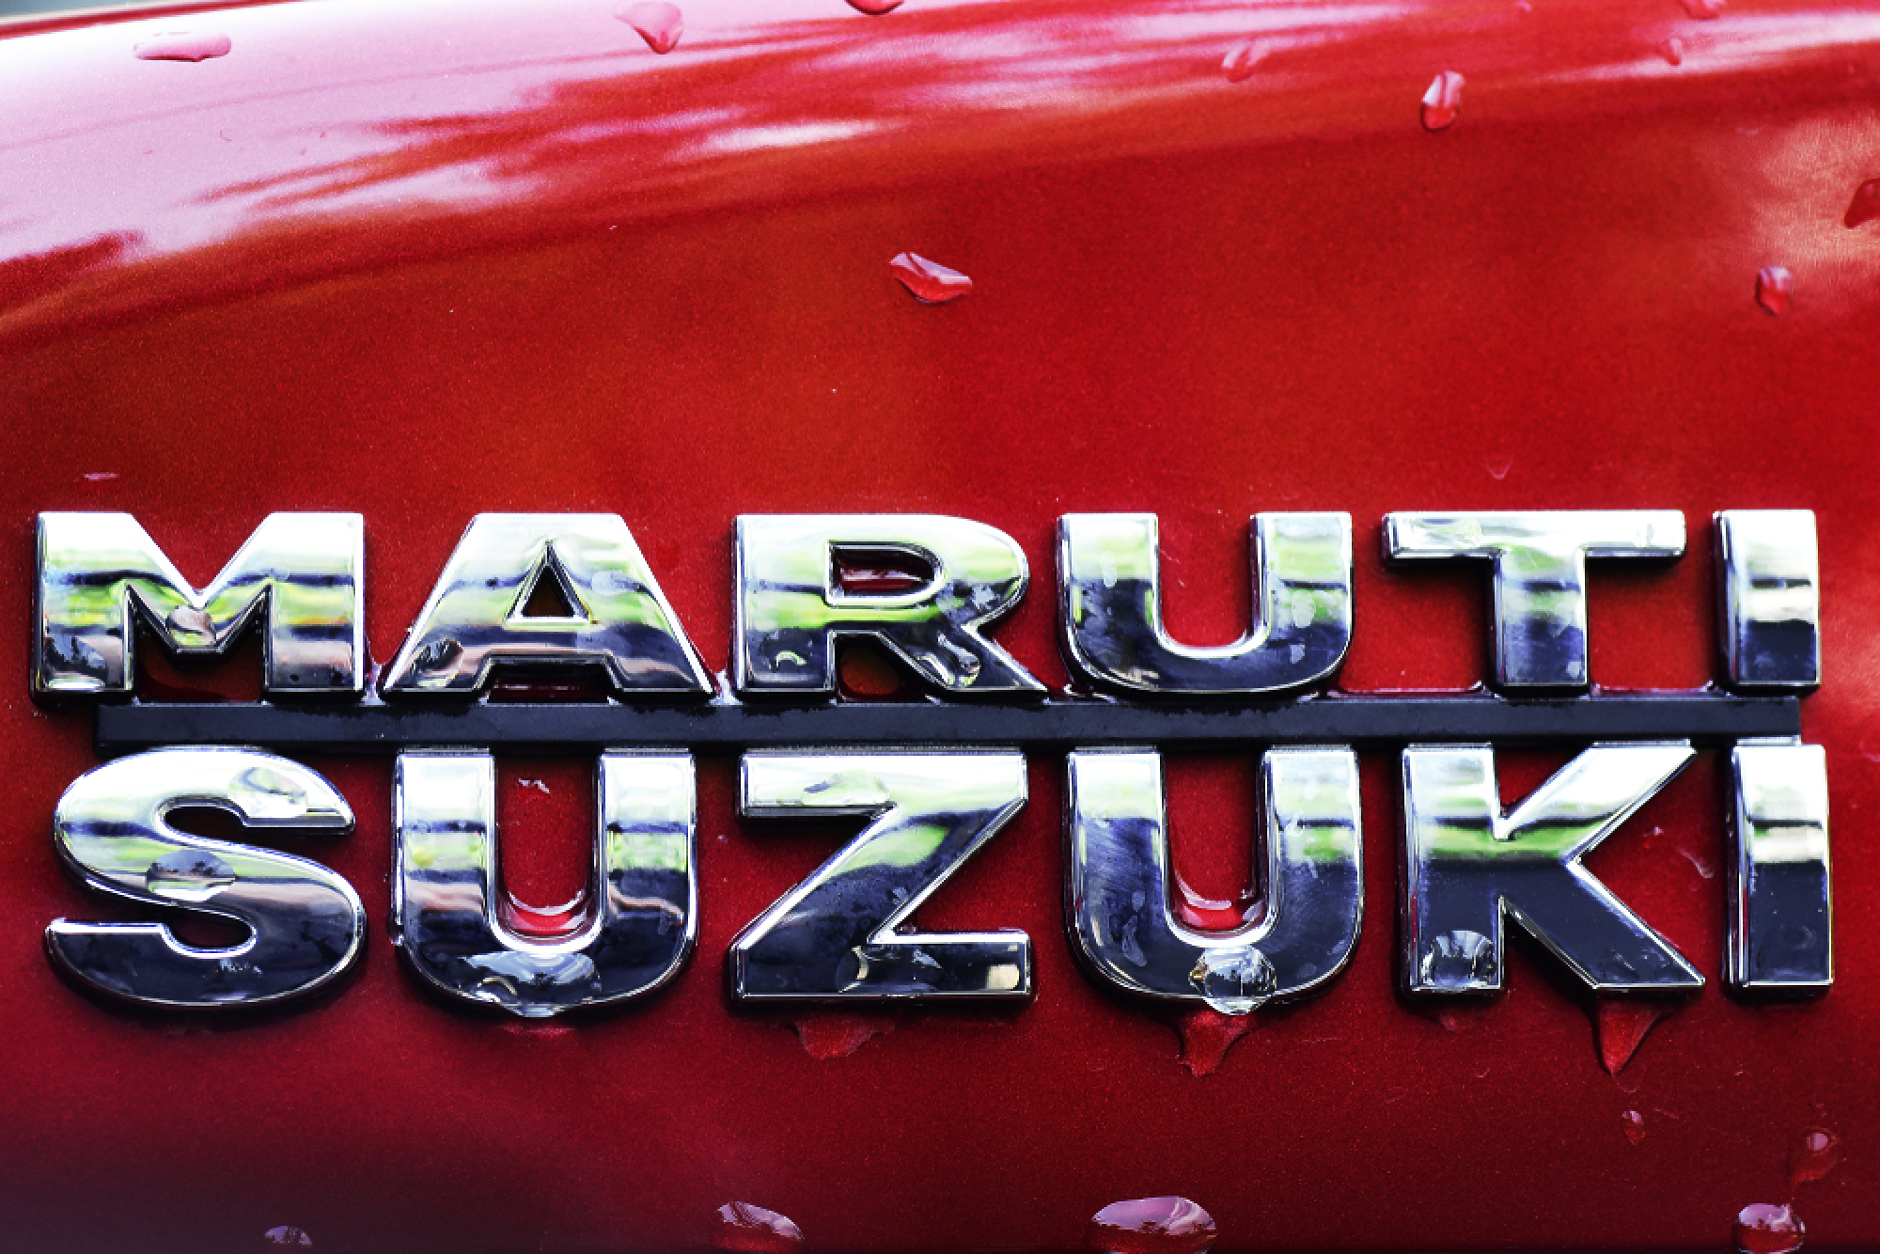 Maruti Suzuki се стреми да пробие в сегмента на премиум автомобилите